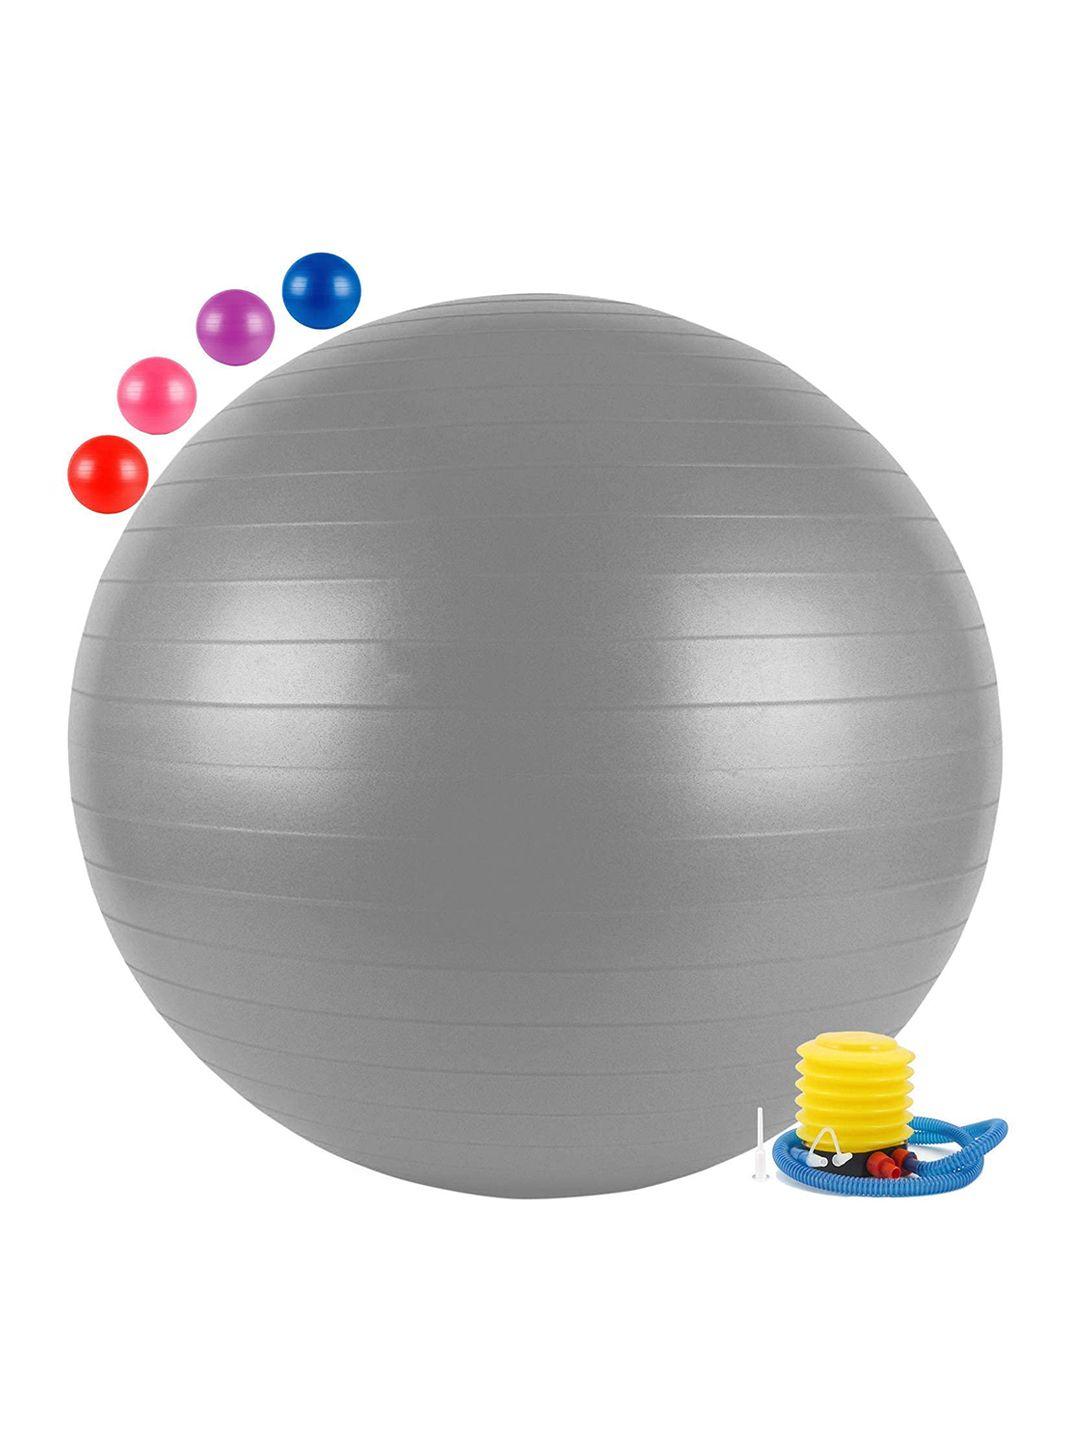 zevora blue anti-burst exercise gym anti-slip balance stability ball with pump